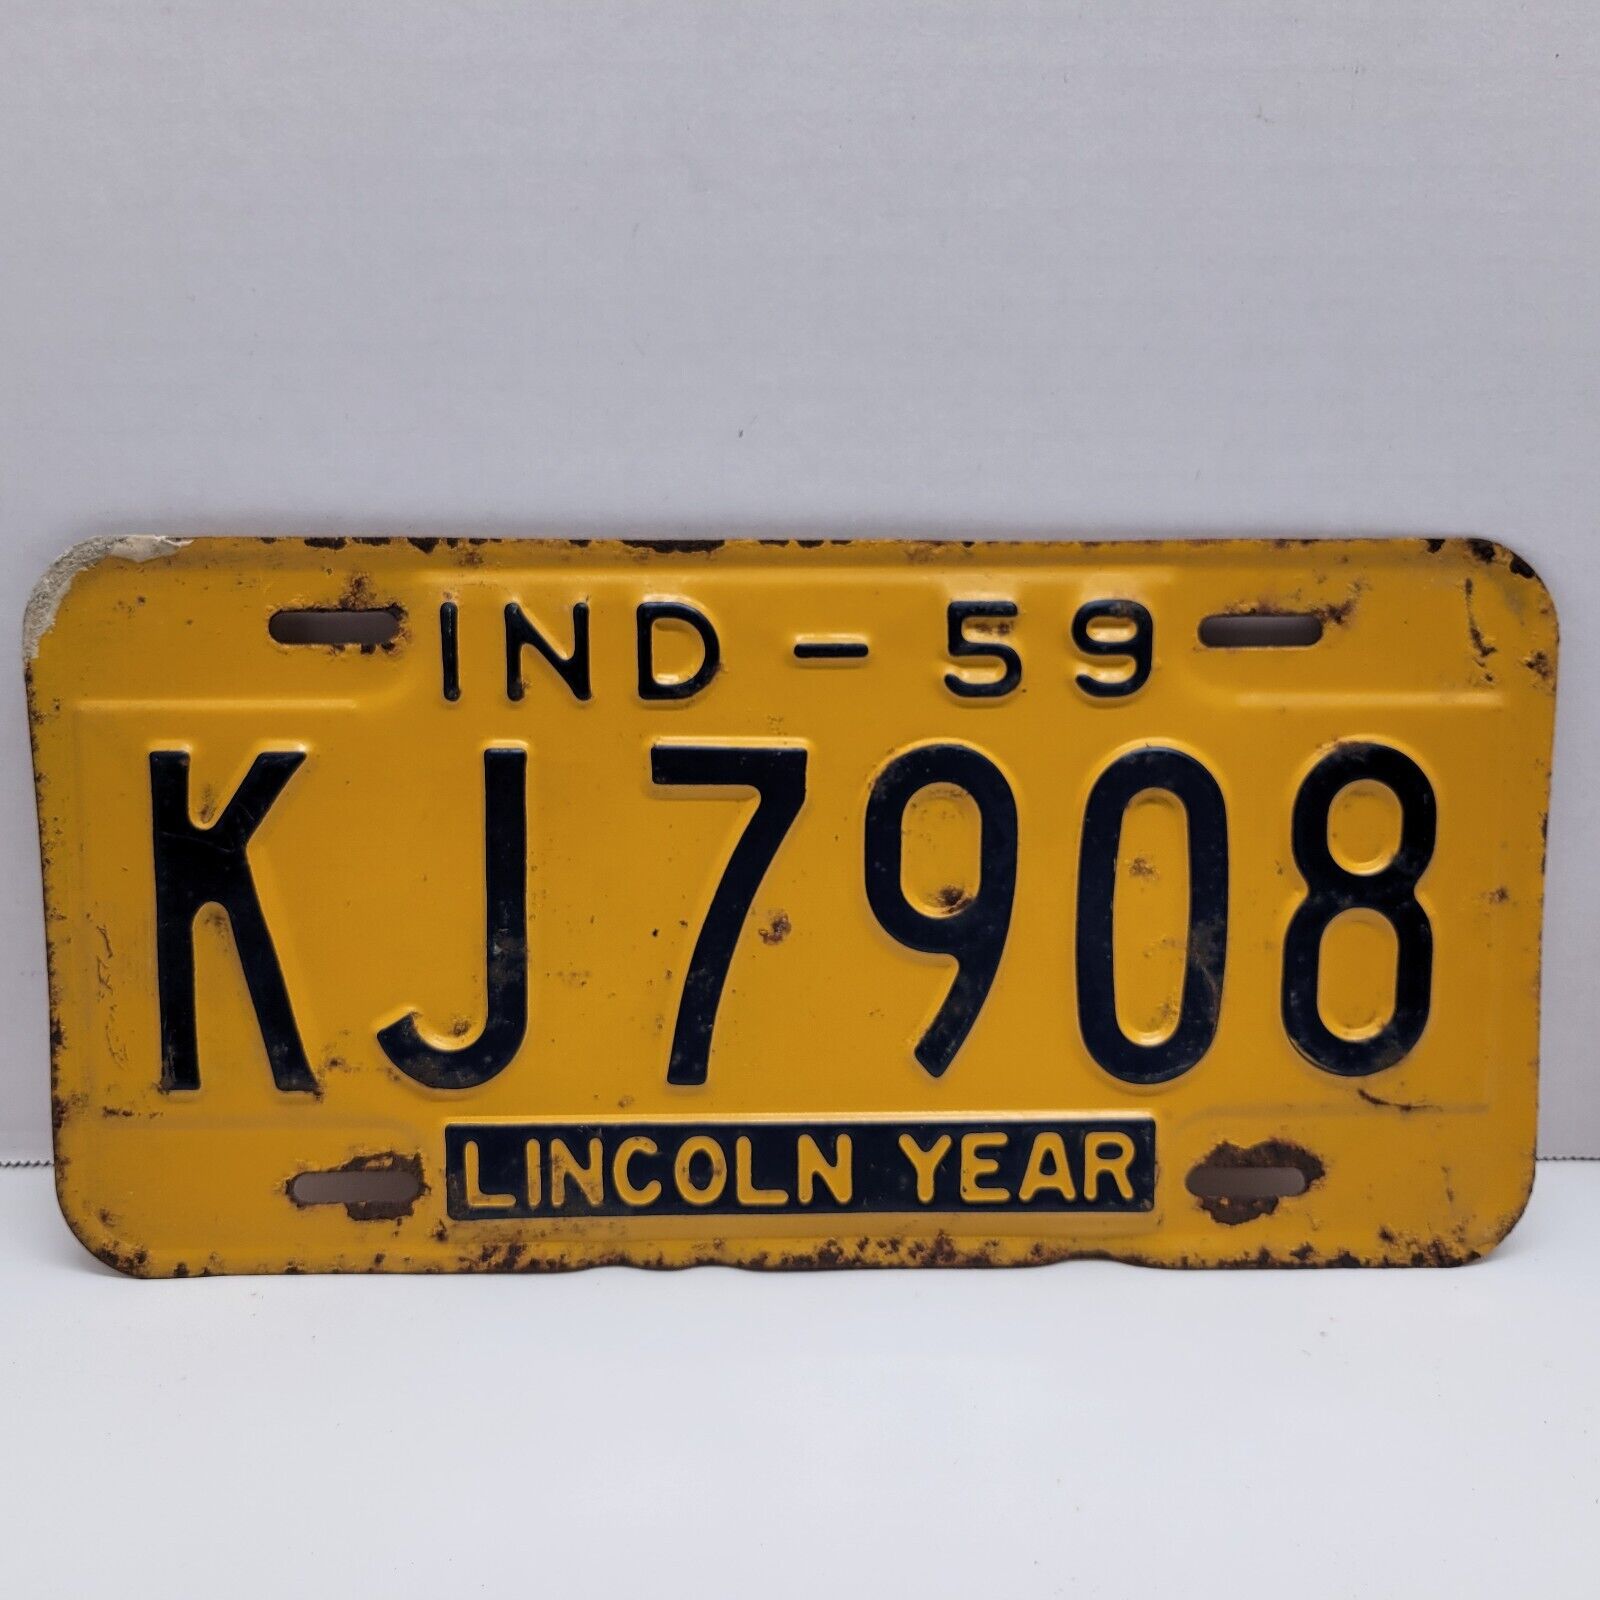 VTG 1959 Indiana Lincoln Year License Plate Tag KJ7908 Yellow & Black Original